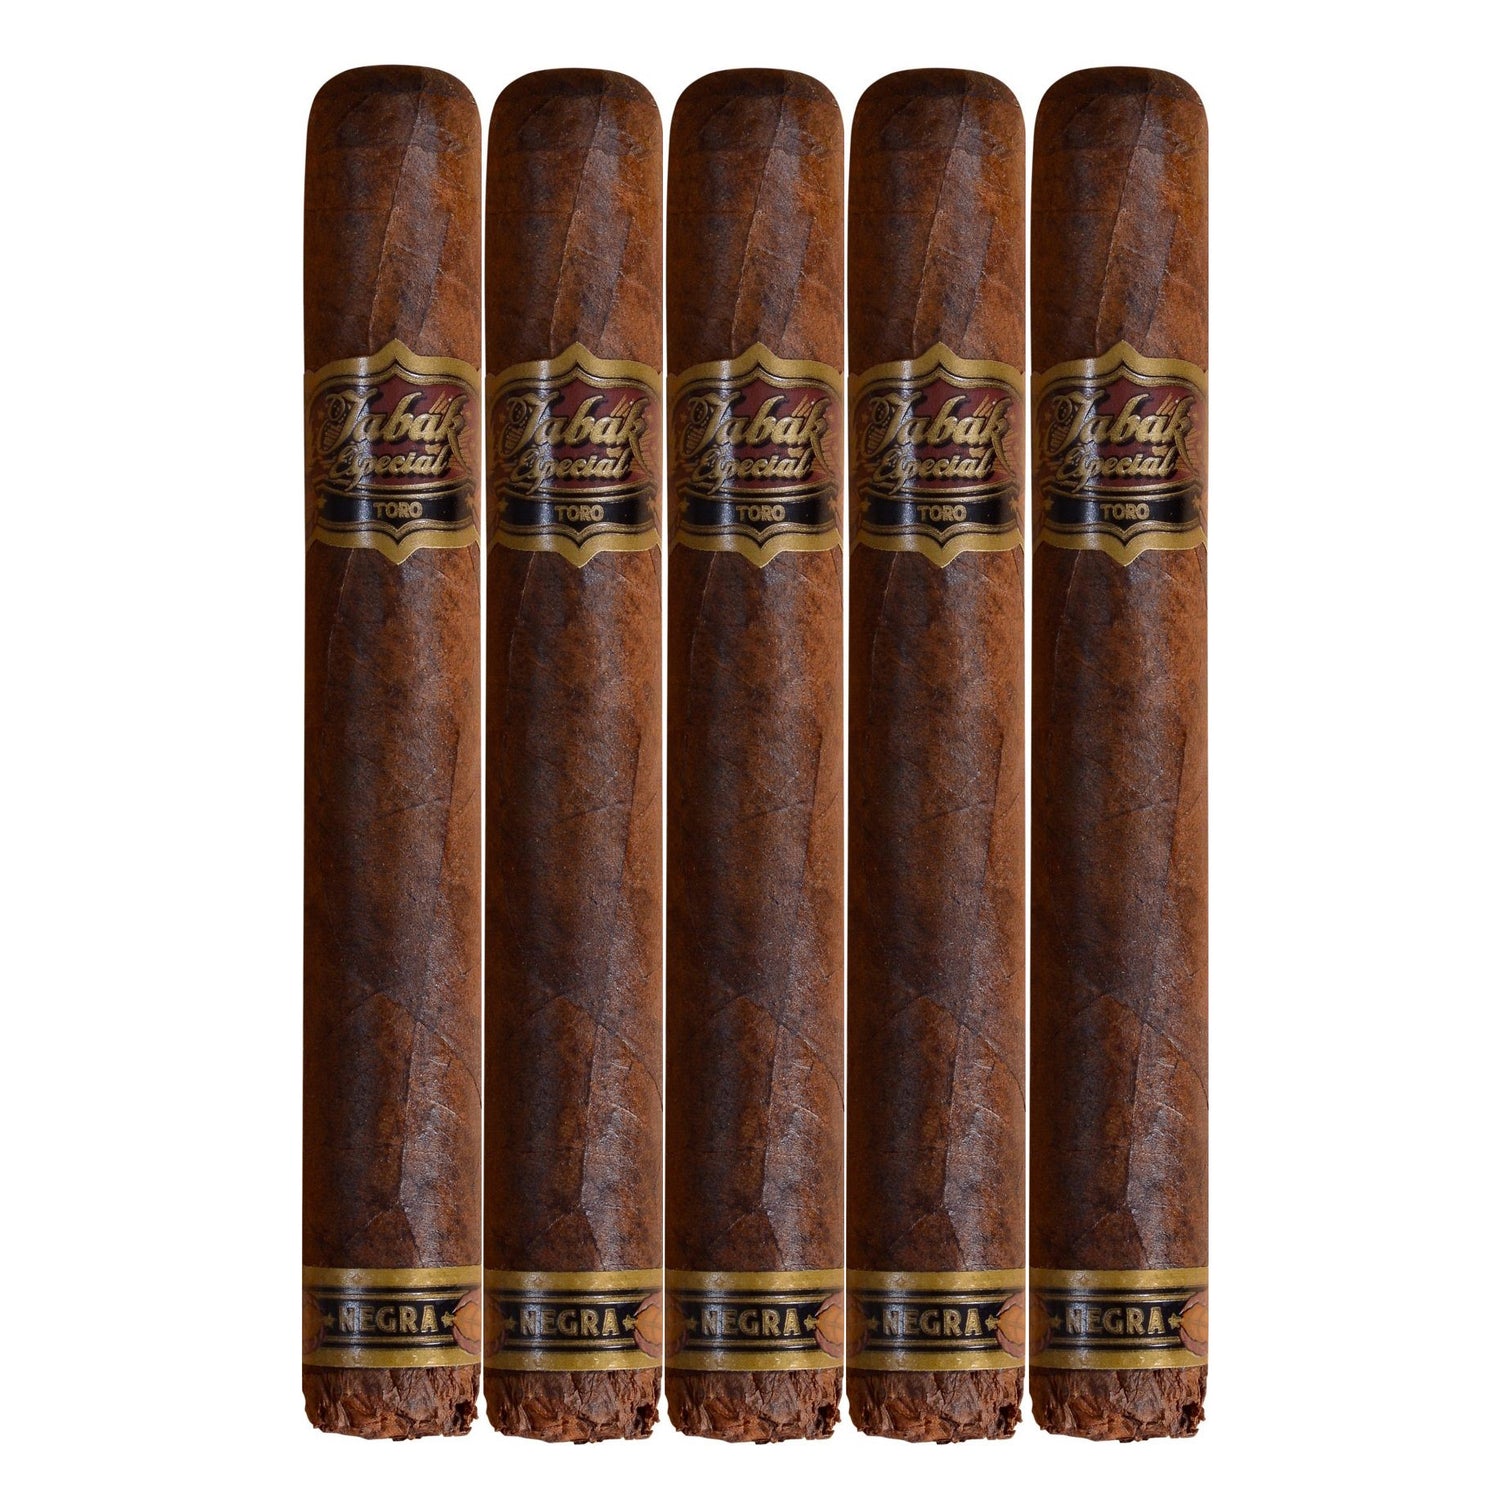 Tabak Especial Toro Negra Cigars